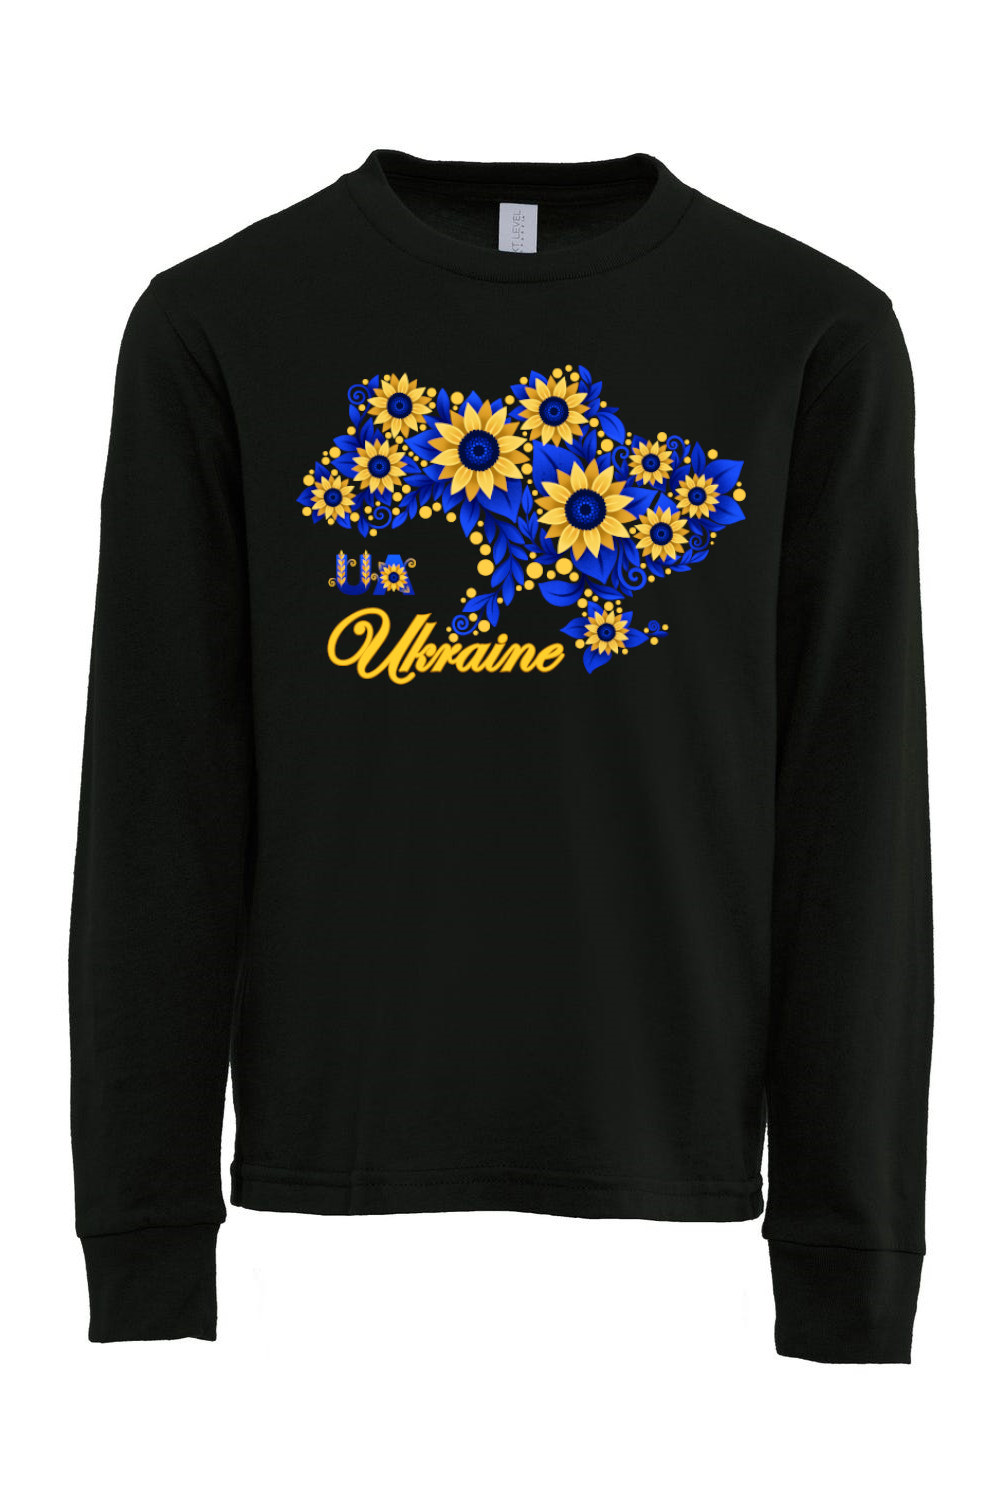 Youth long sleeve shirt "Sunflower Ukraine"